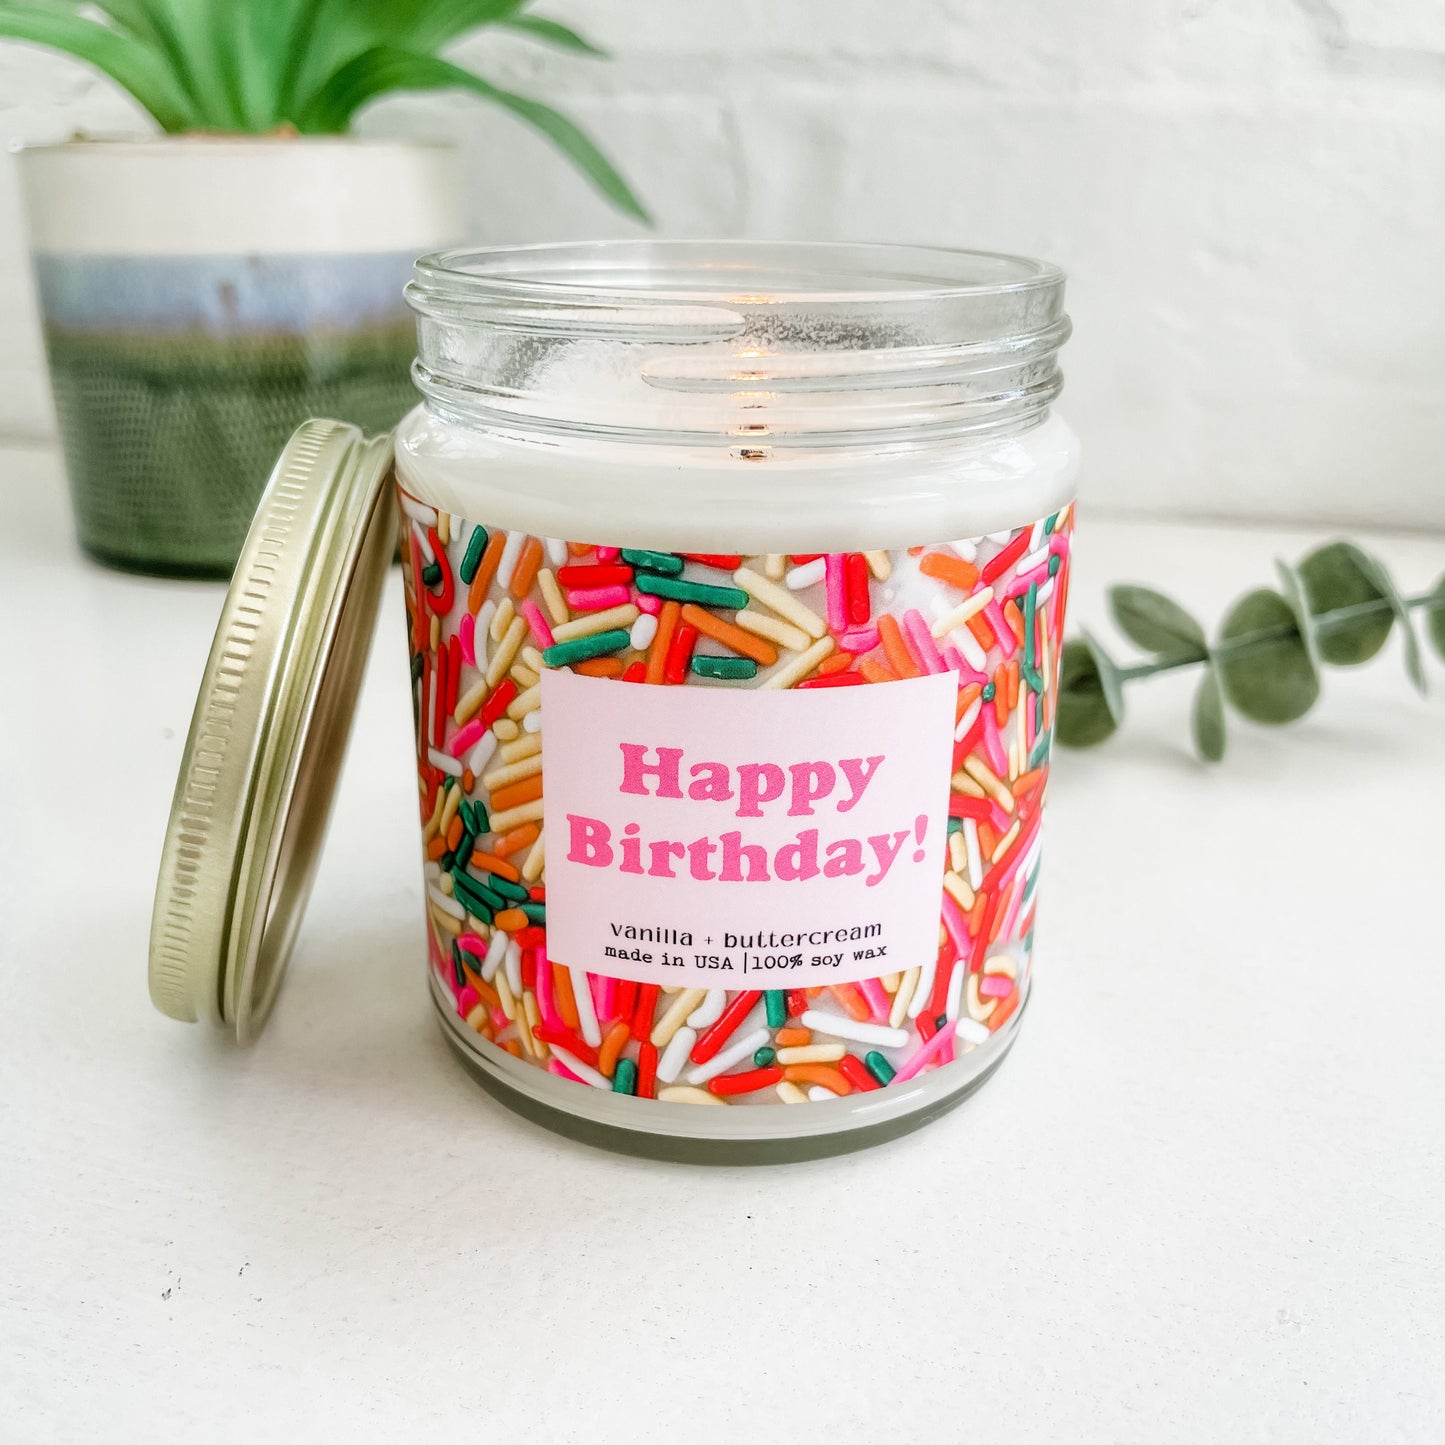 Happy Birthday (Sprinkles) - 9oz Glass Jar Soy Candle - Vanilla & Buttercream Scent